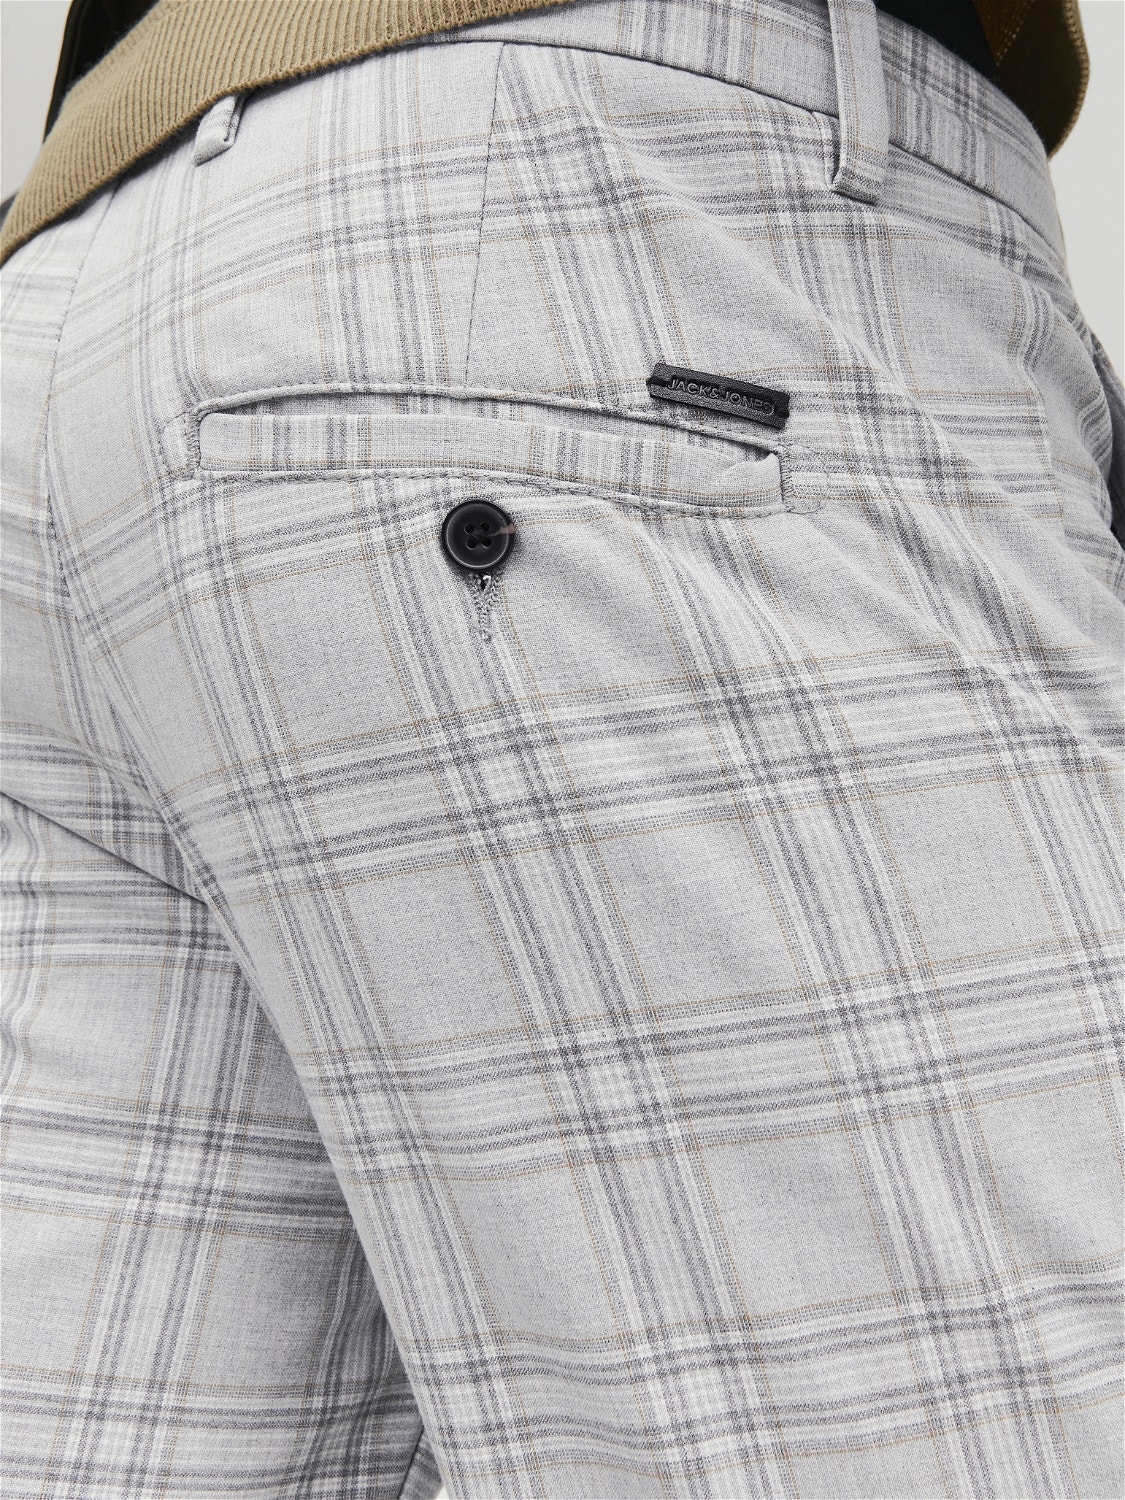 Jack & Jones Slim Fit Chino trousers -Doe - 12205776